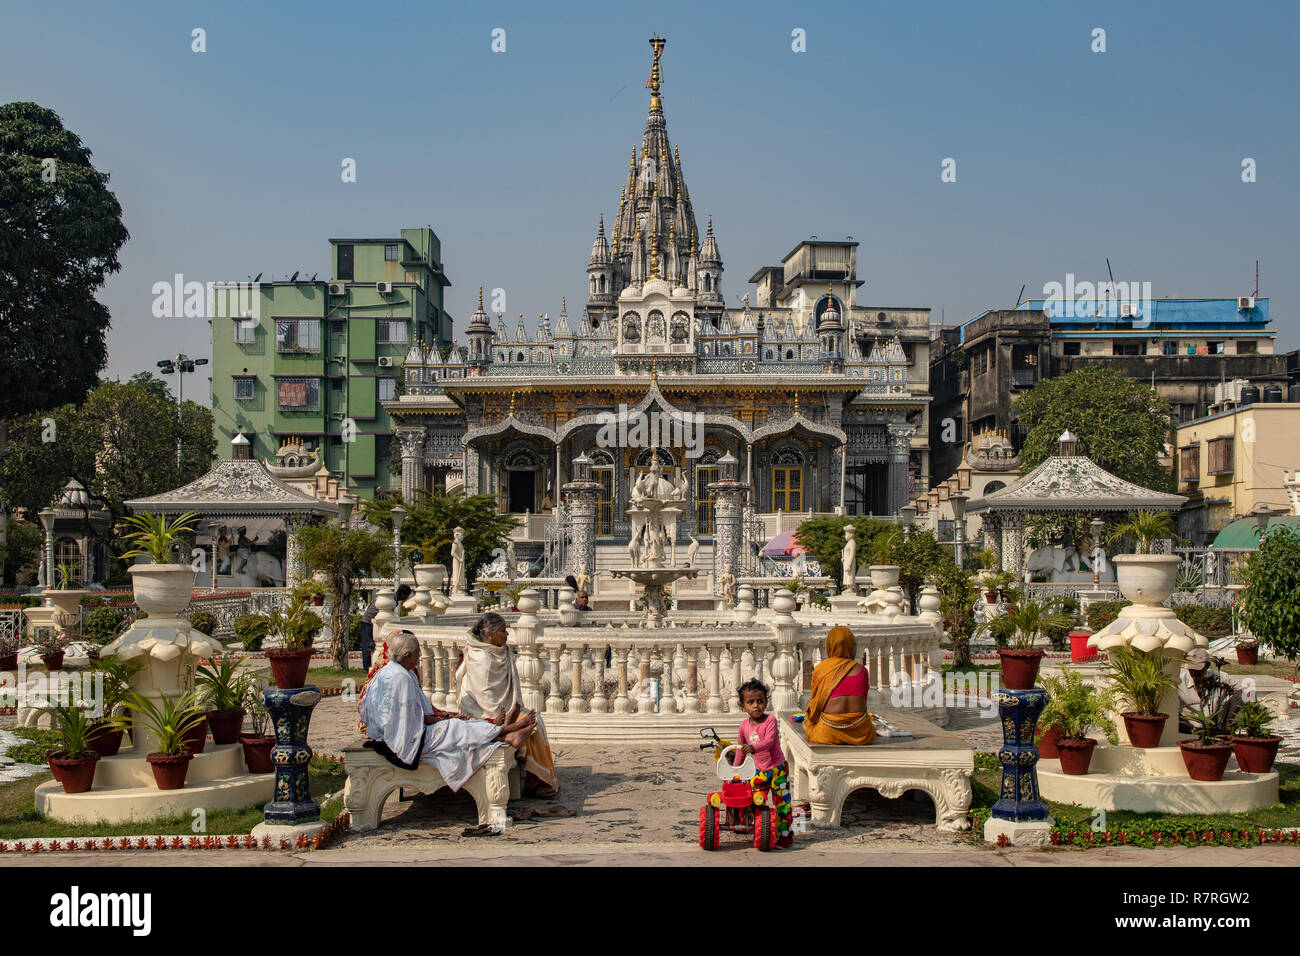 Parshwanath Jain temple, Kolkata, West Bengal, India Banque D'Images